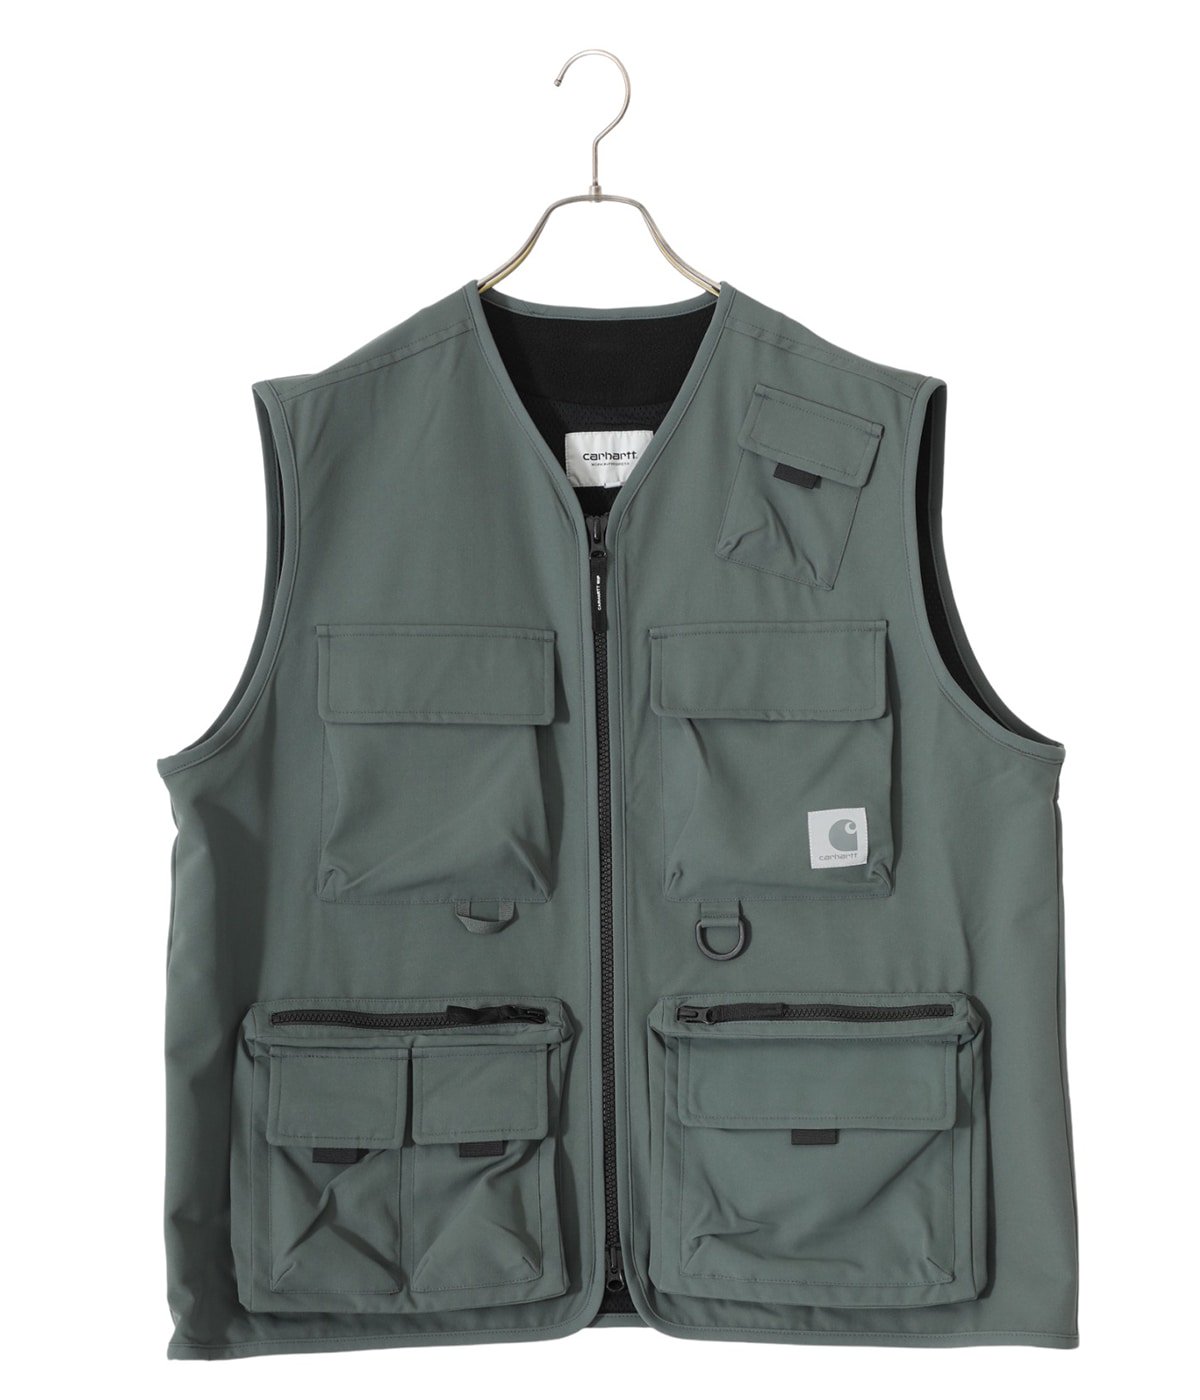 carharttwipcarhartt wip vest size L